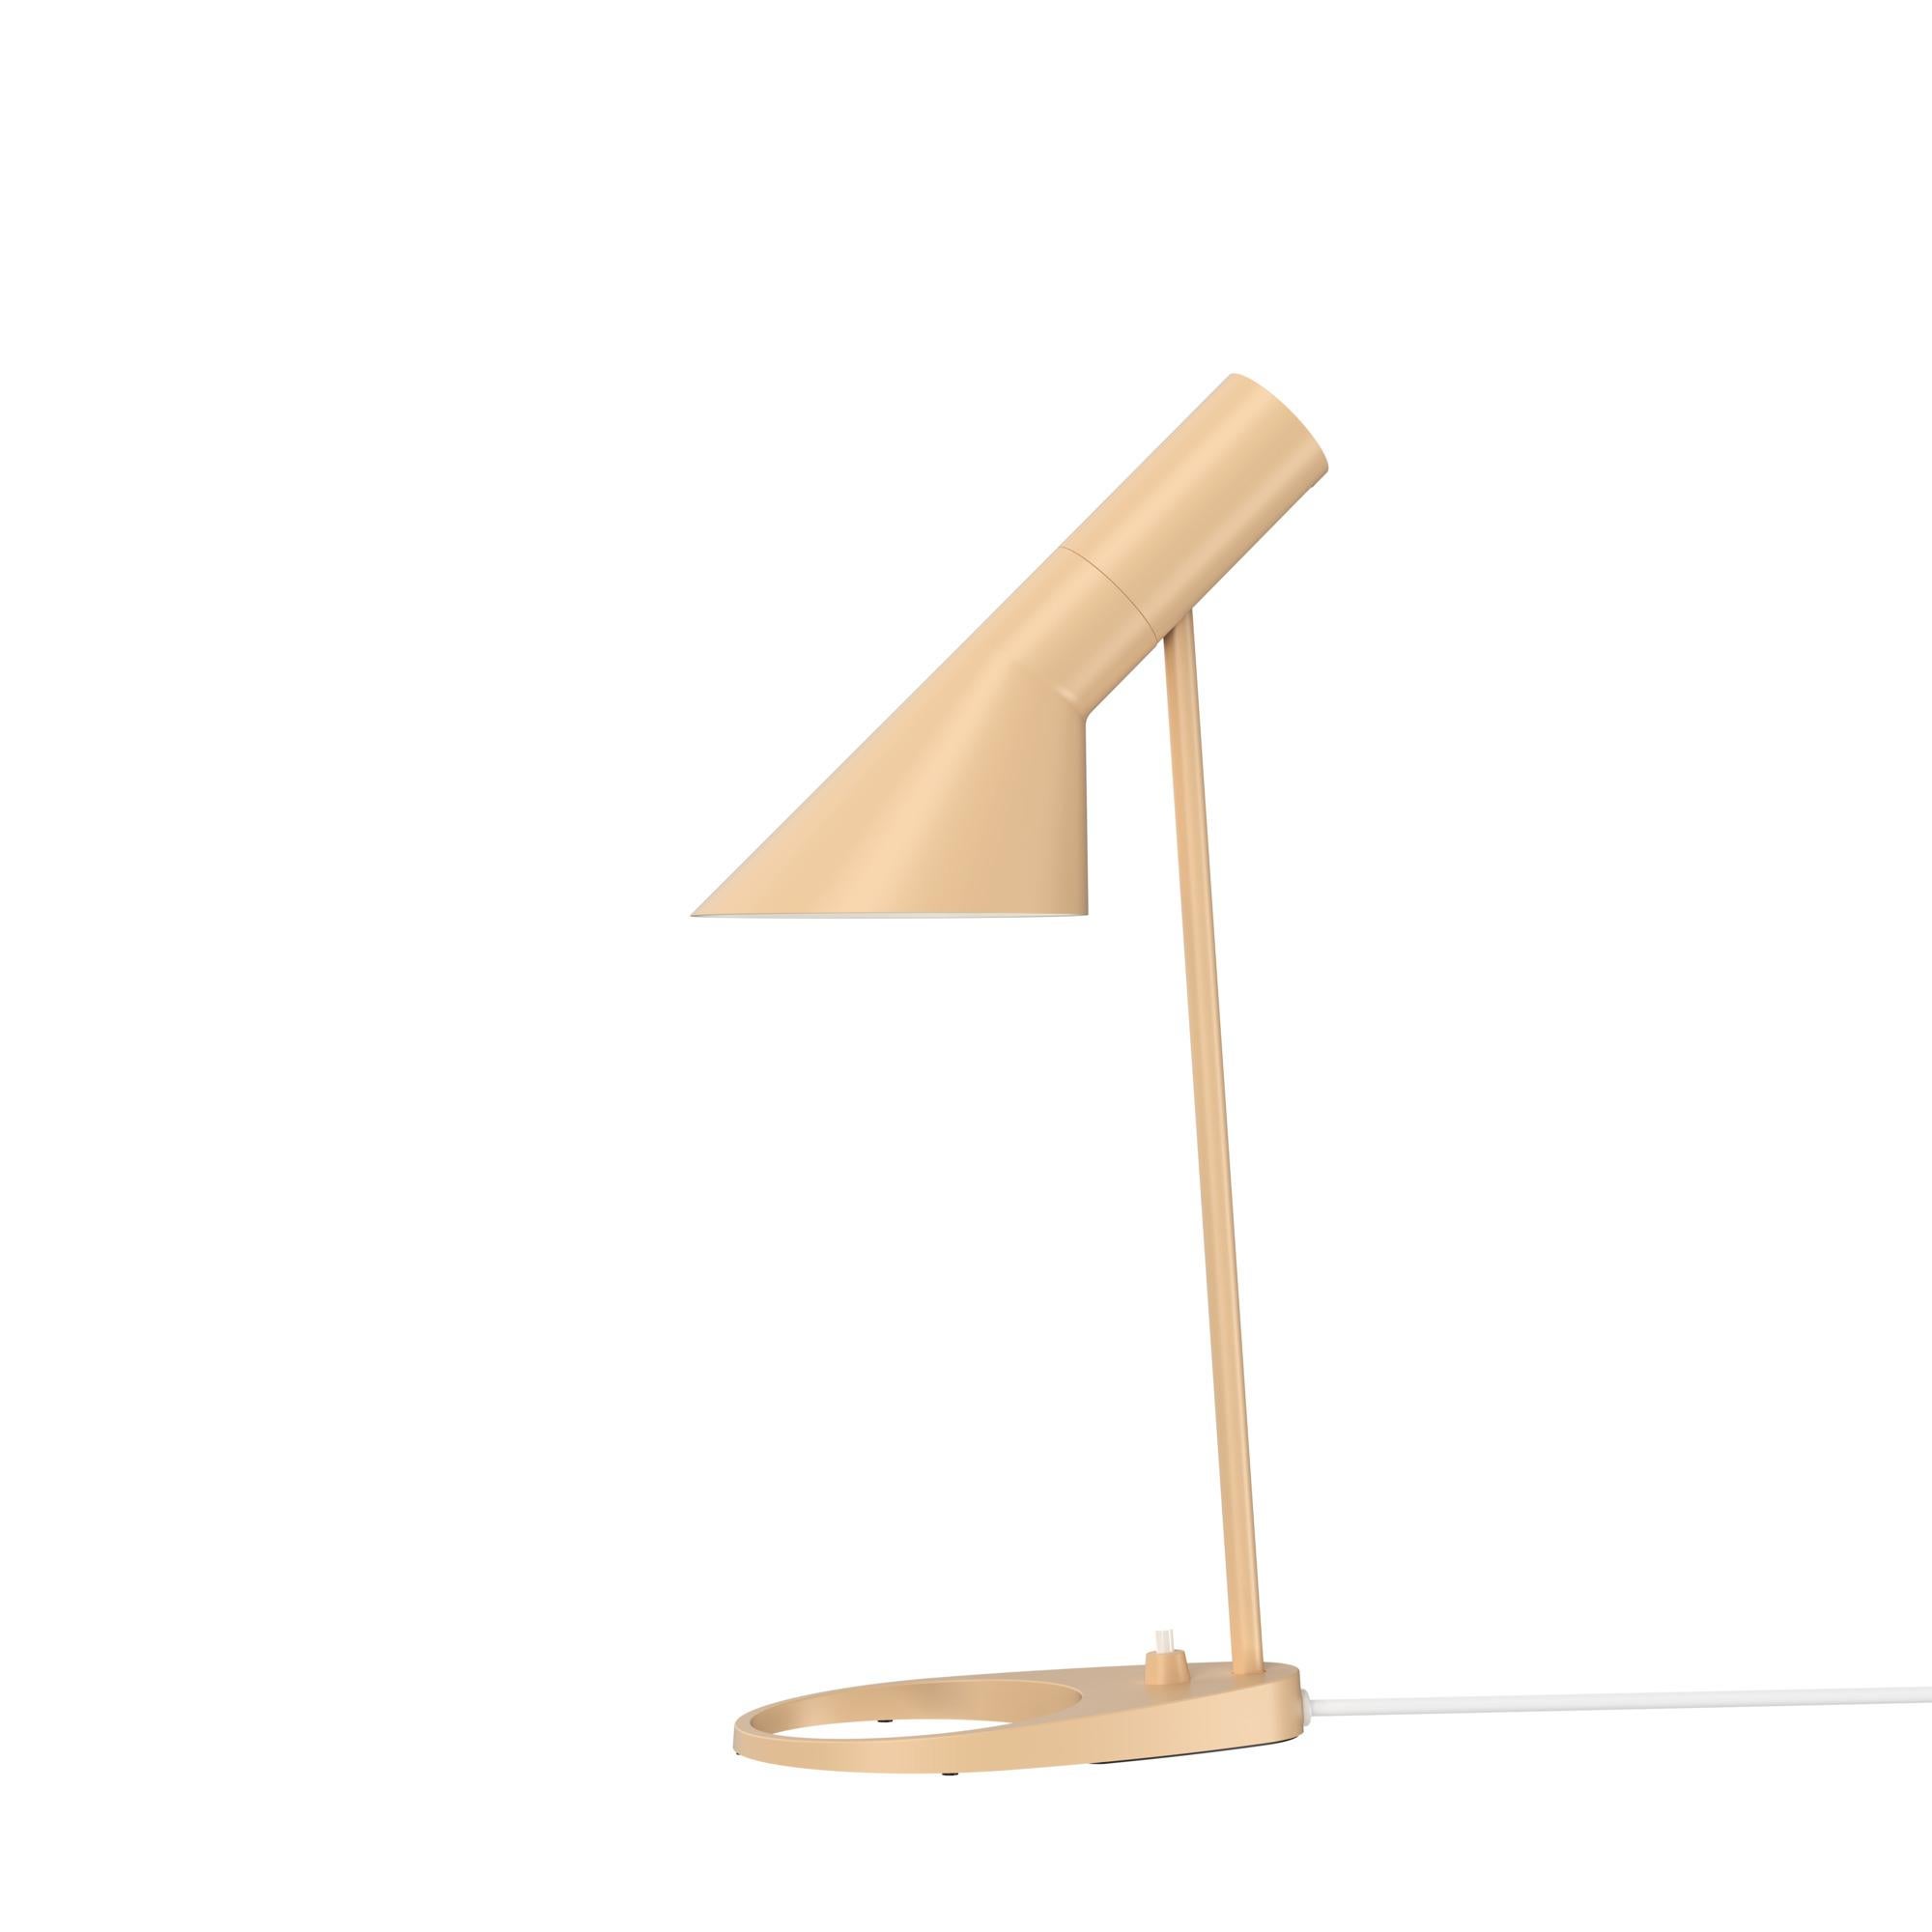 Arne Jacobsen 'AJ Mini' Table Lamp in Pale Petroleum for Louis Poulsen For Sale 6